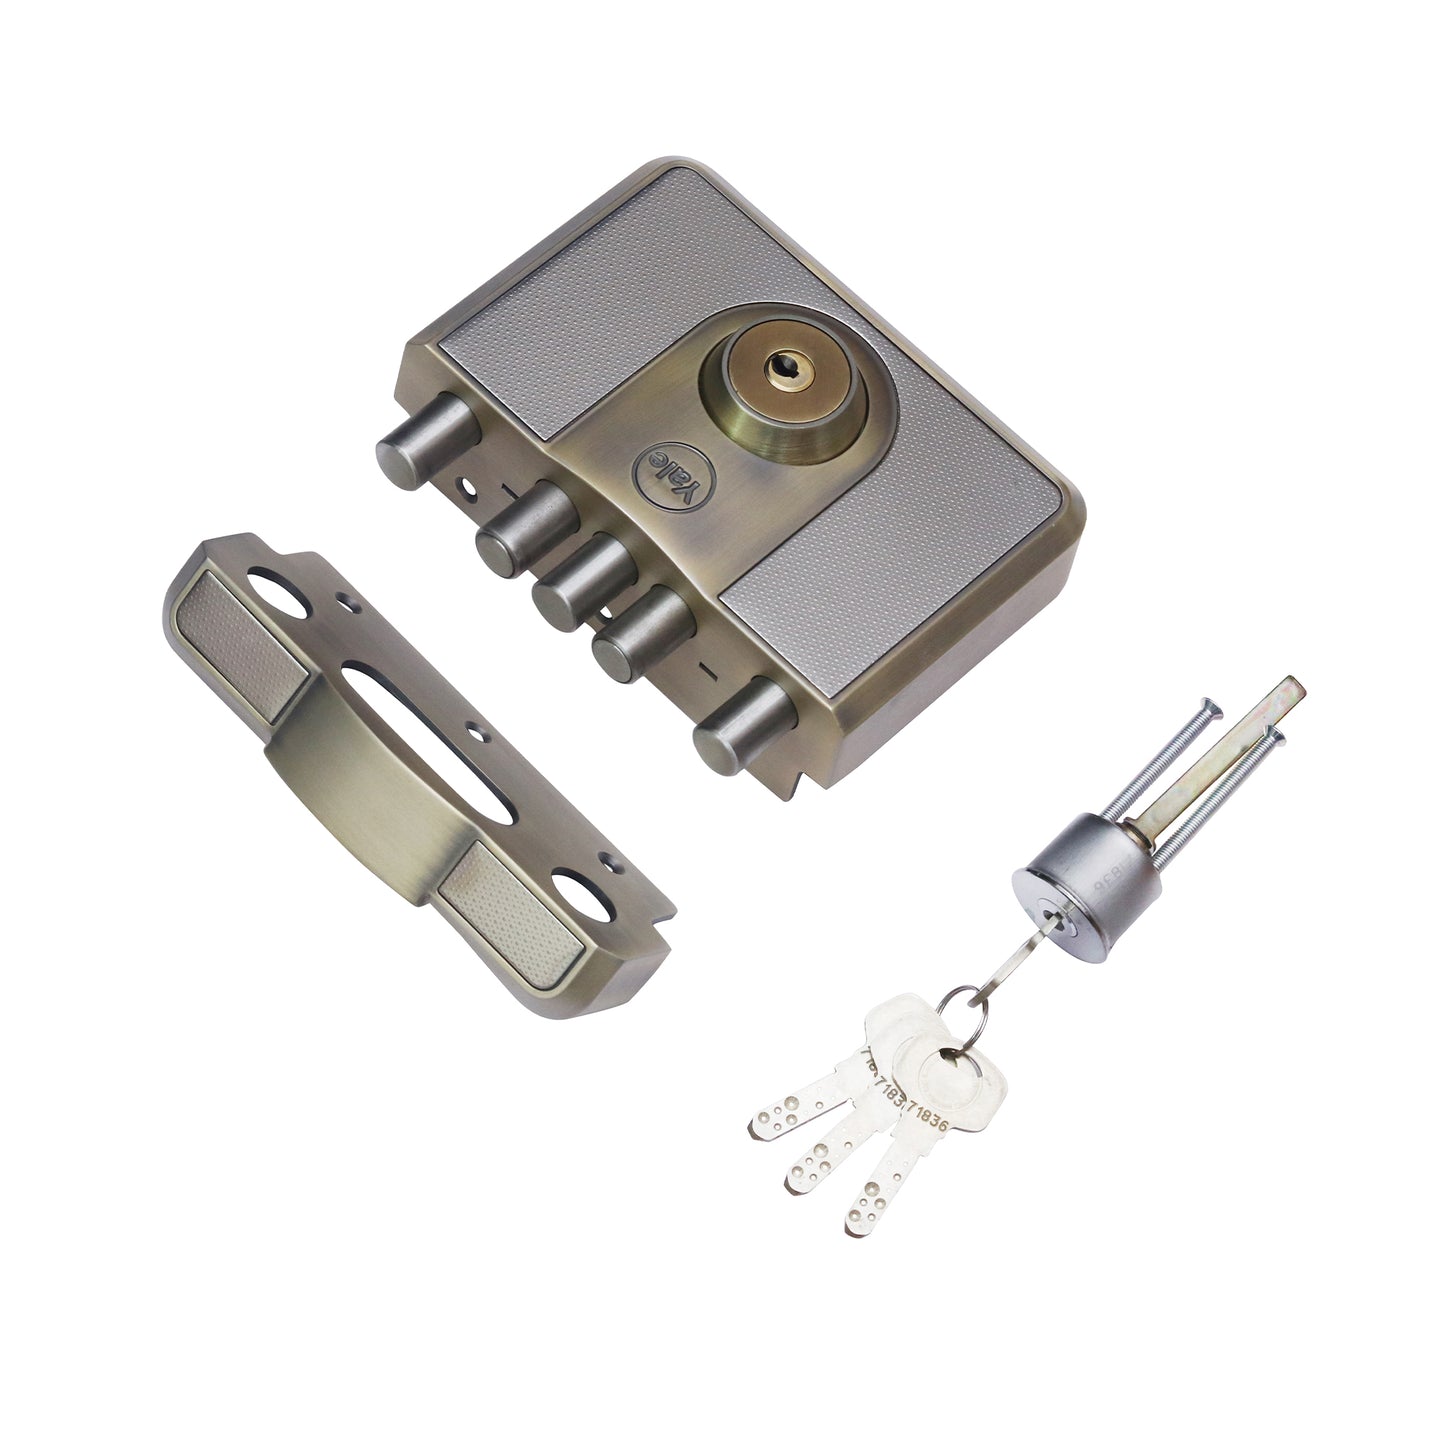 CBD-Cinco 500 Series 5 Dead Bolt Main Door RIM Lock, Both Side Keys, Antique Brass, with Dimple keys